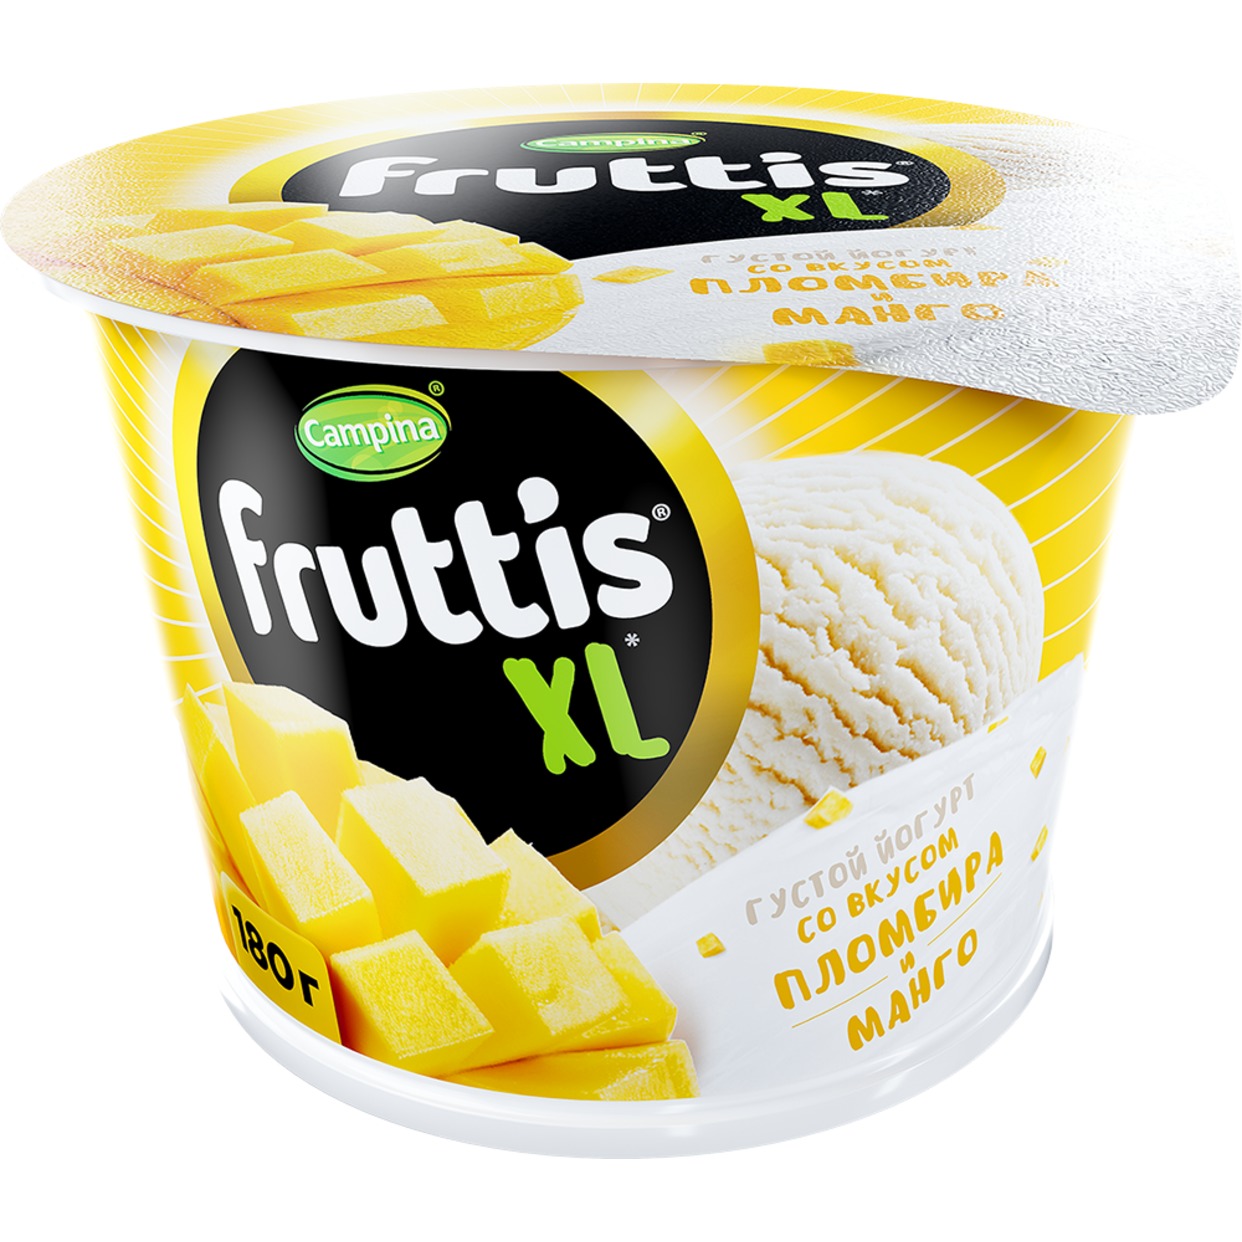 Йогурт Fruttis XL c манго и вкусом пломбира 4,3% 180г